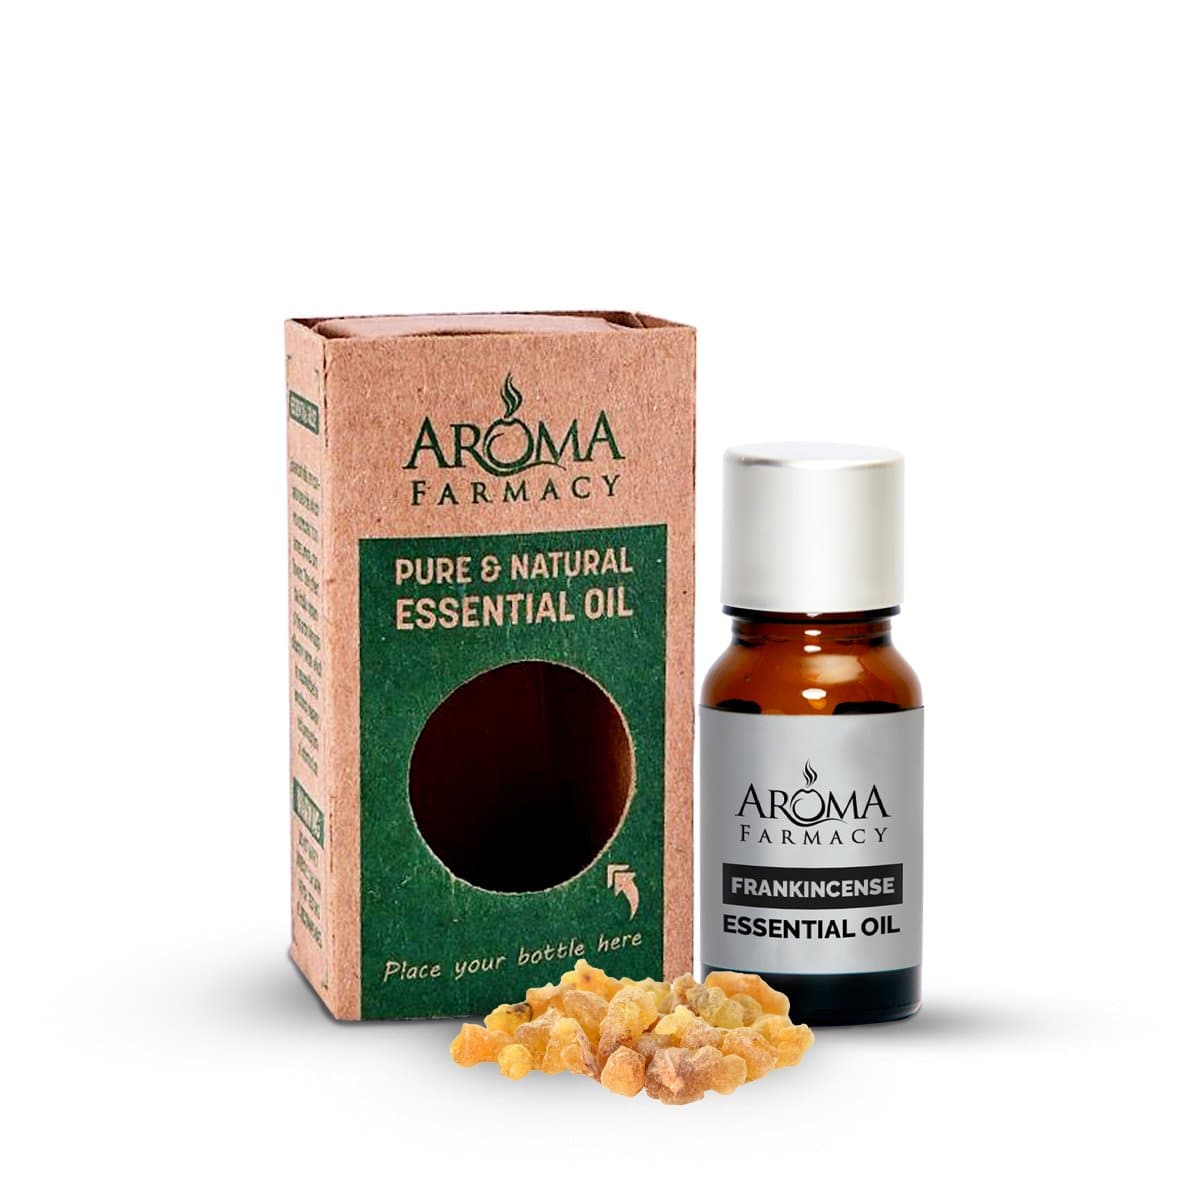 F.E.O.S Essential Oil, 100% Pure Aromatherapy Essential Oils for